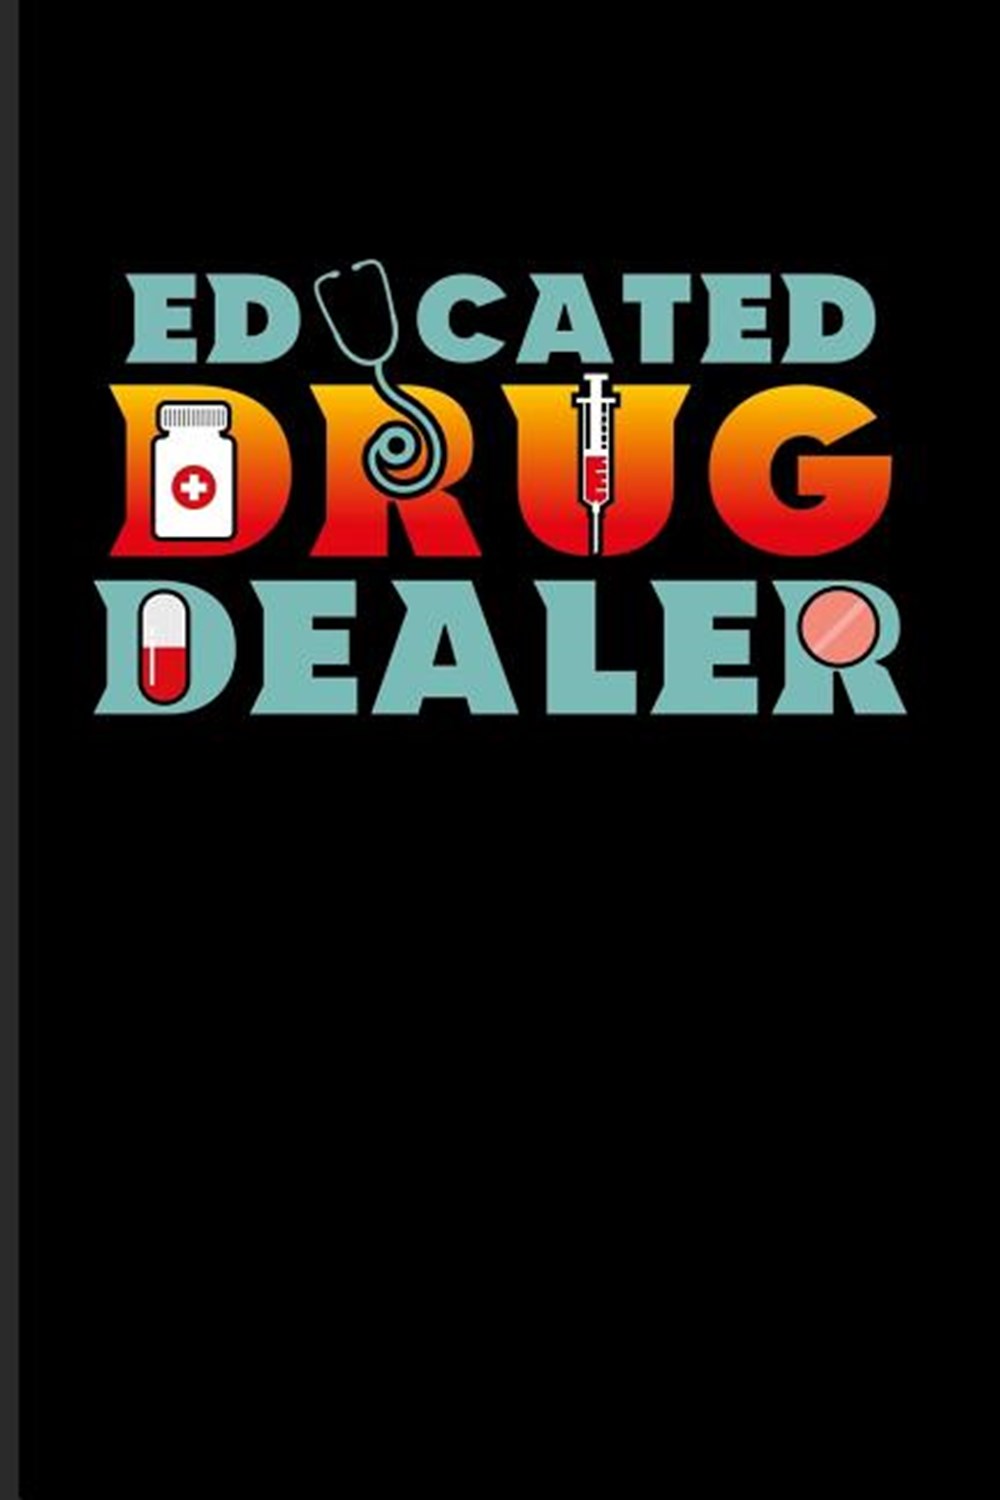 Educated Drug Dealer Funny Pharmacy Sayings Journal For Medication, Pharmacology, Technician, Health